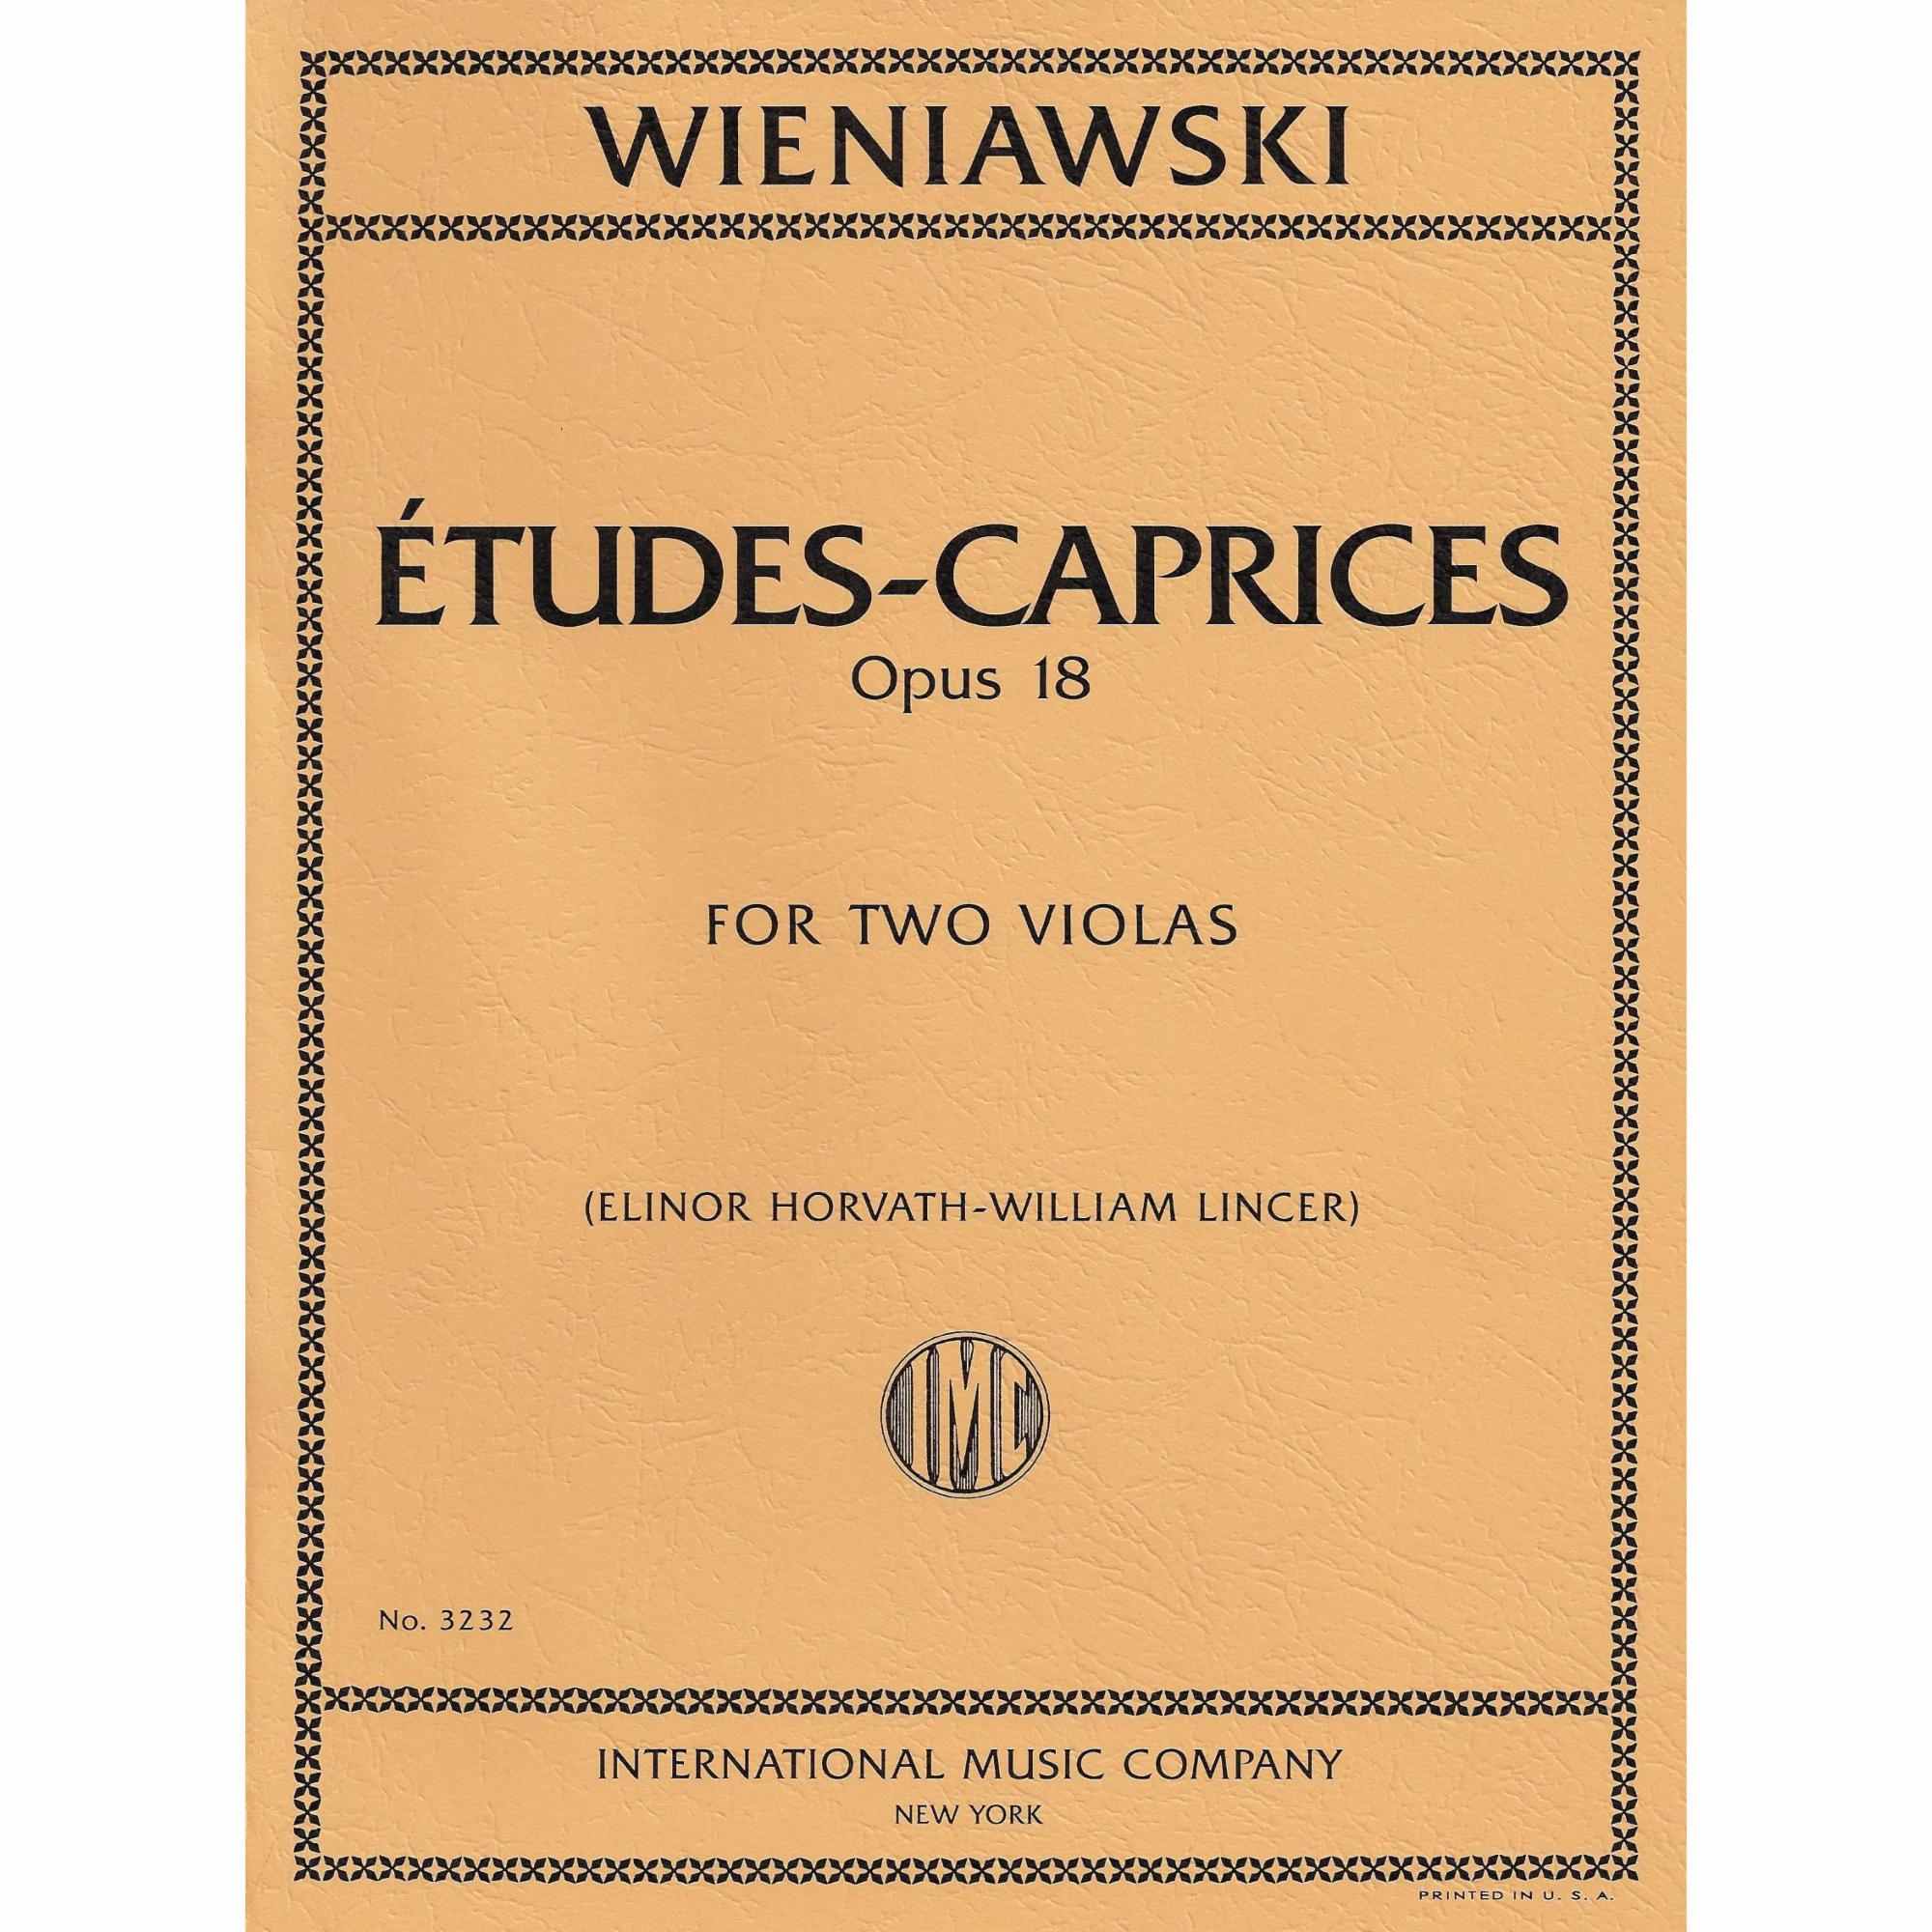 Wieniawski -- Etudes-Caprices, Op. 18 for Two Violas